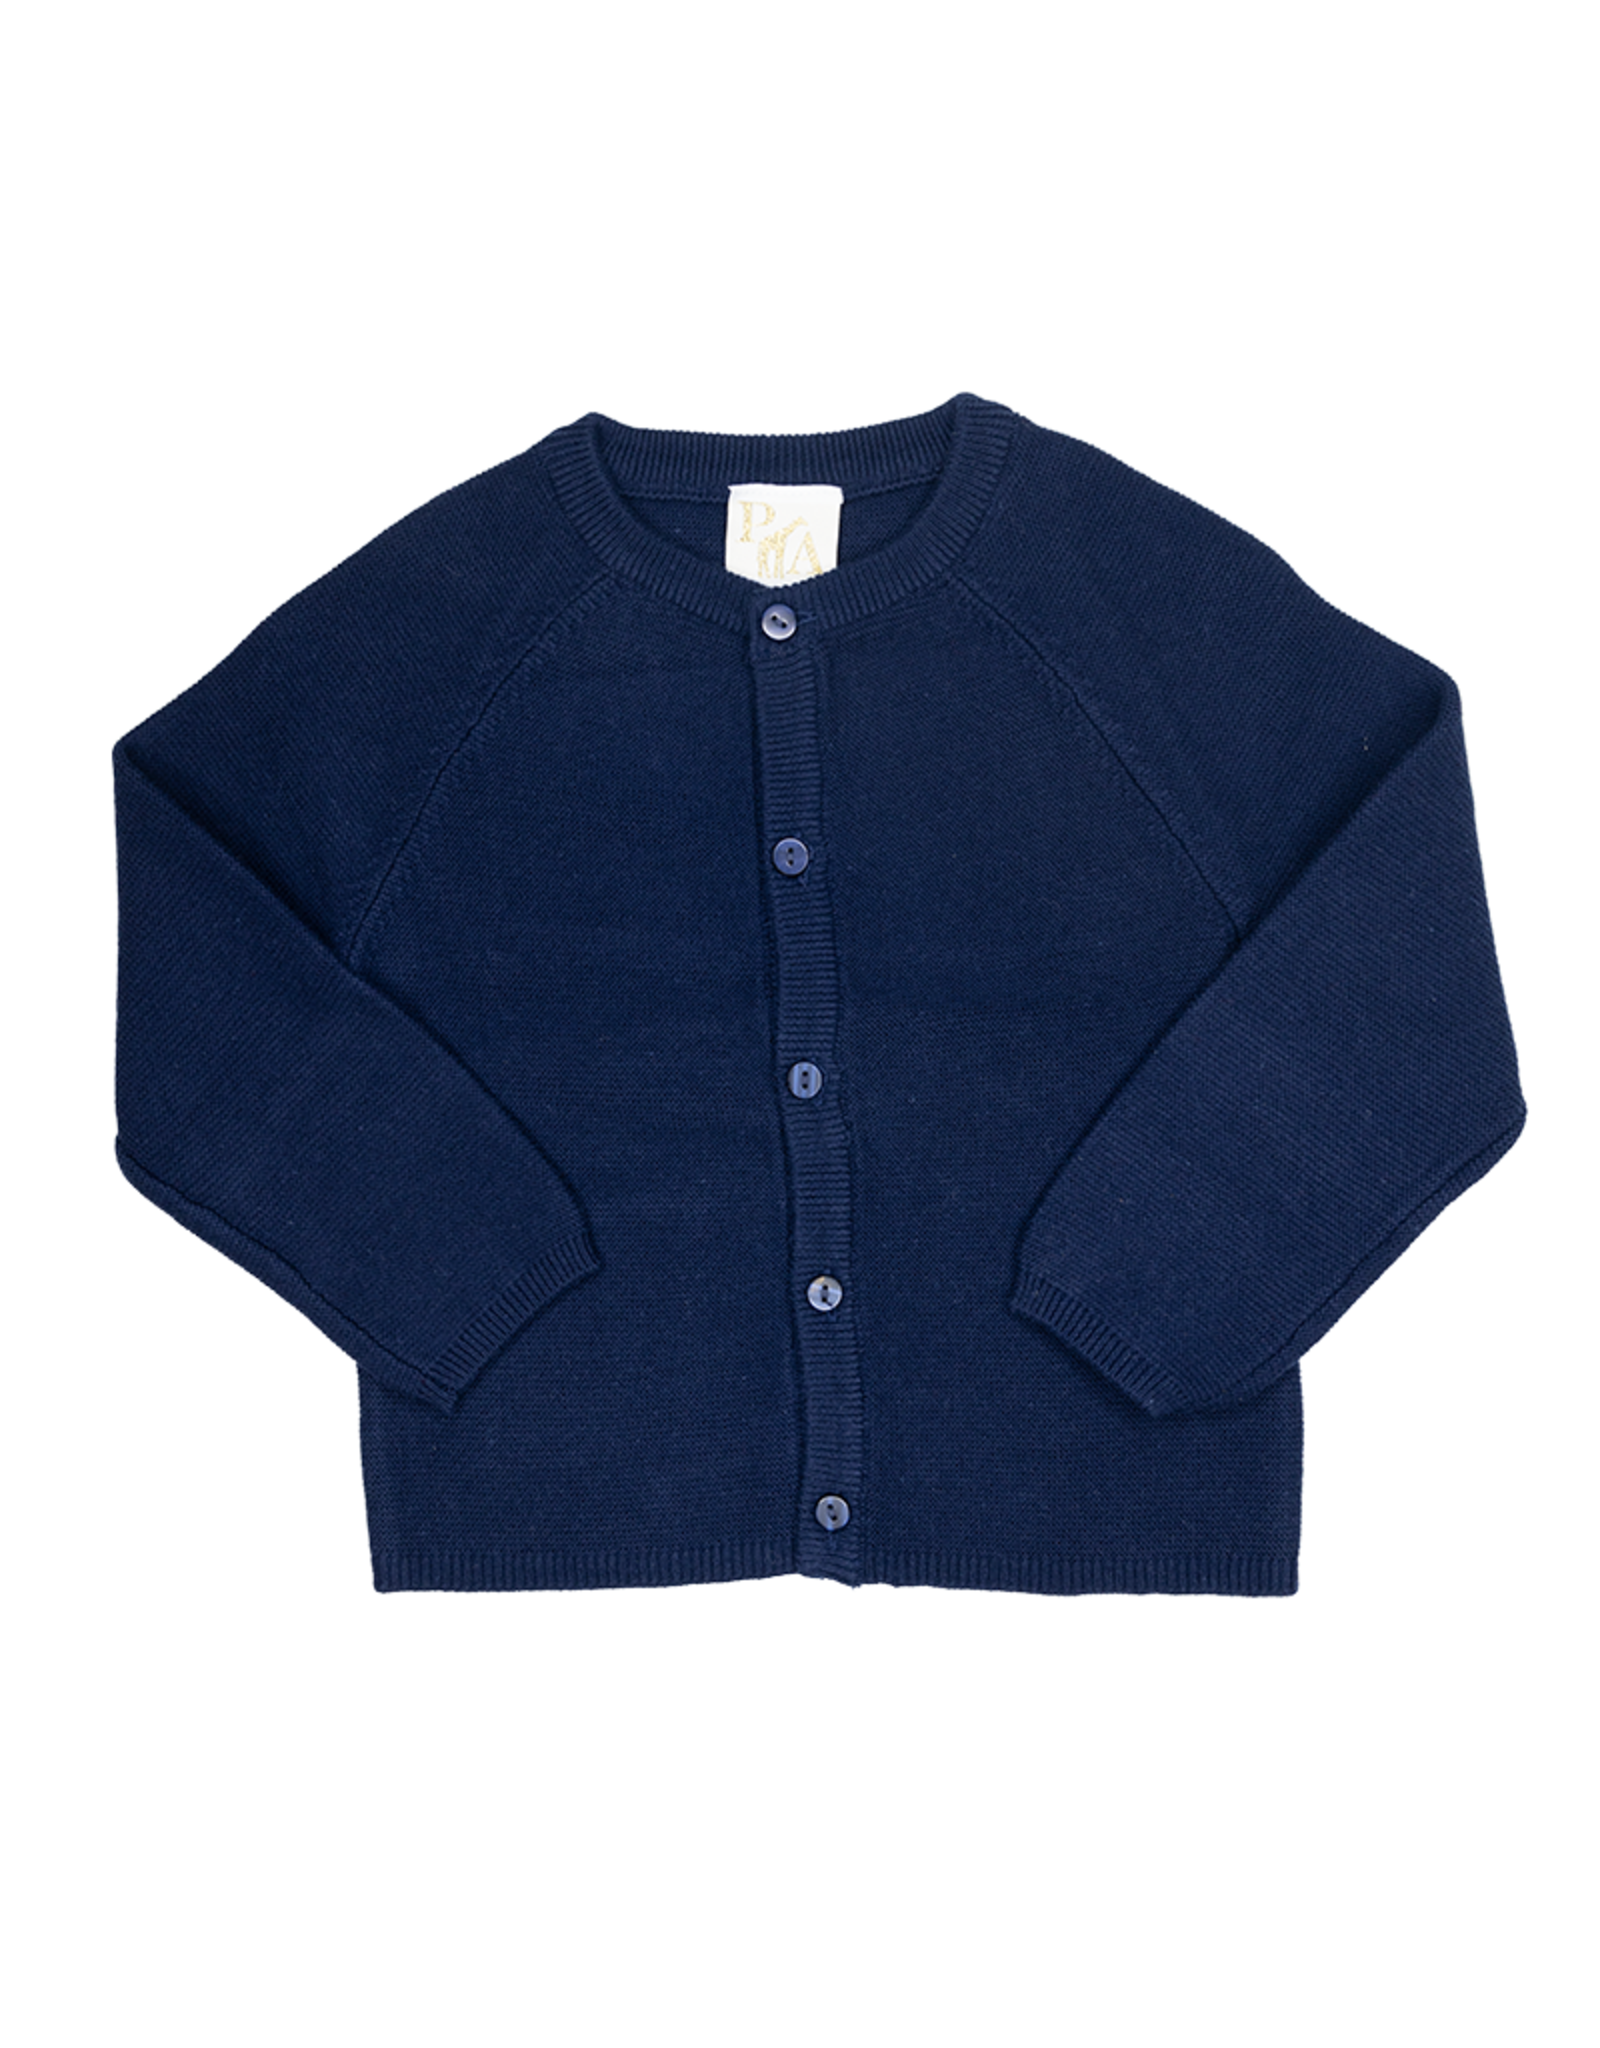 Petit Ami 3-4119 Navy Cardigan Sweater